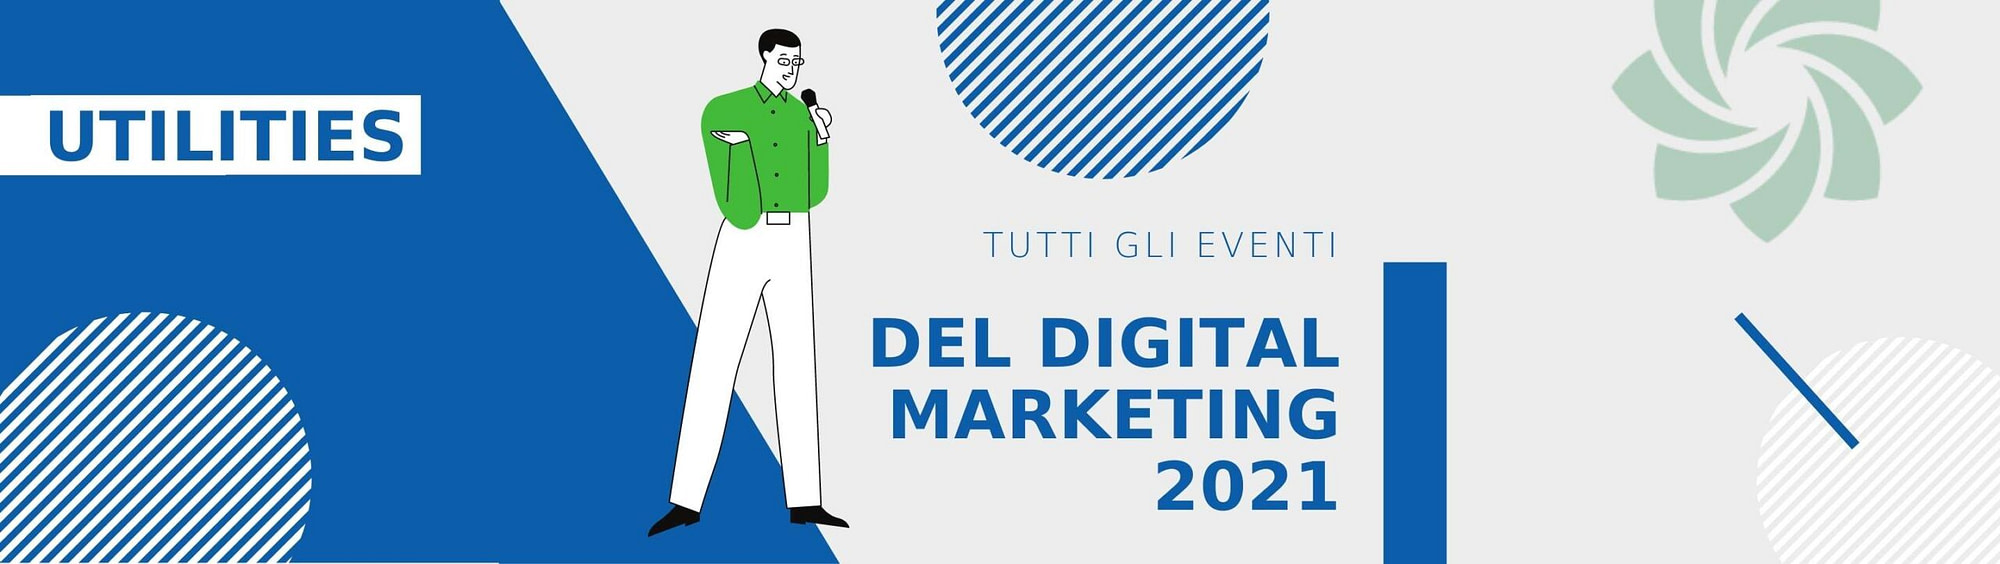 eventi-digita-marketing-2021